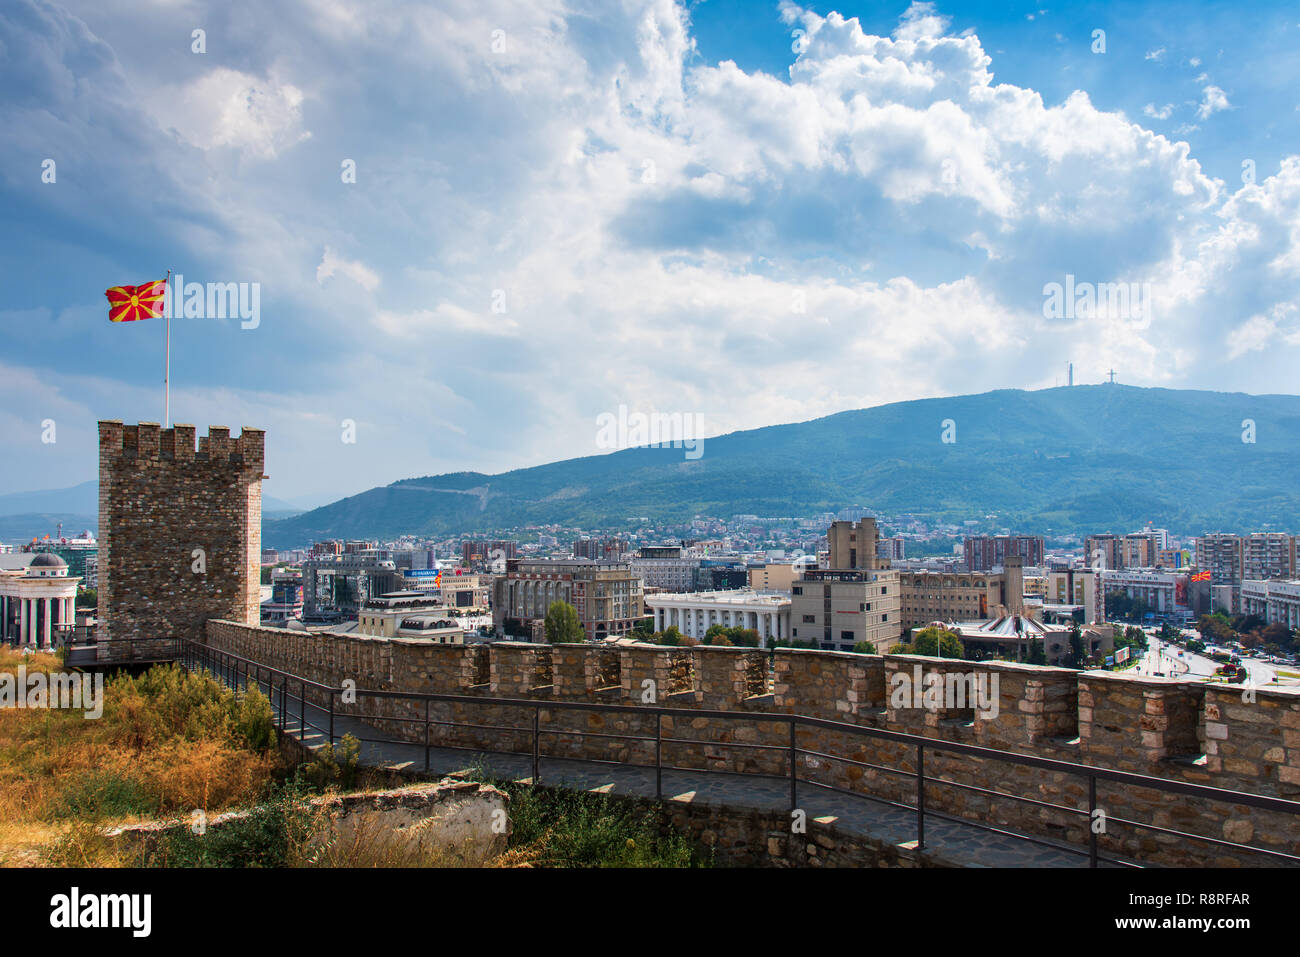 Skopje, Macedonia - August 26, 2017: Skopje cityscape landmark view from the fortress, capital city of Macedonia Stock Photo